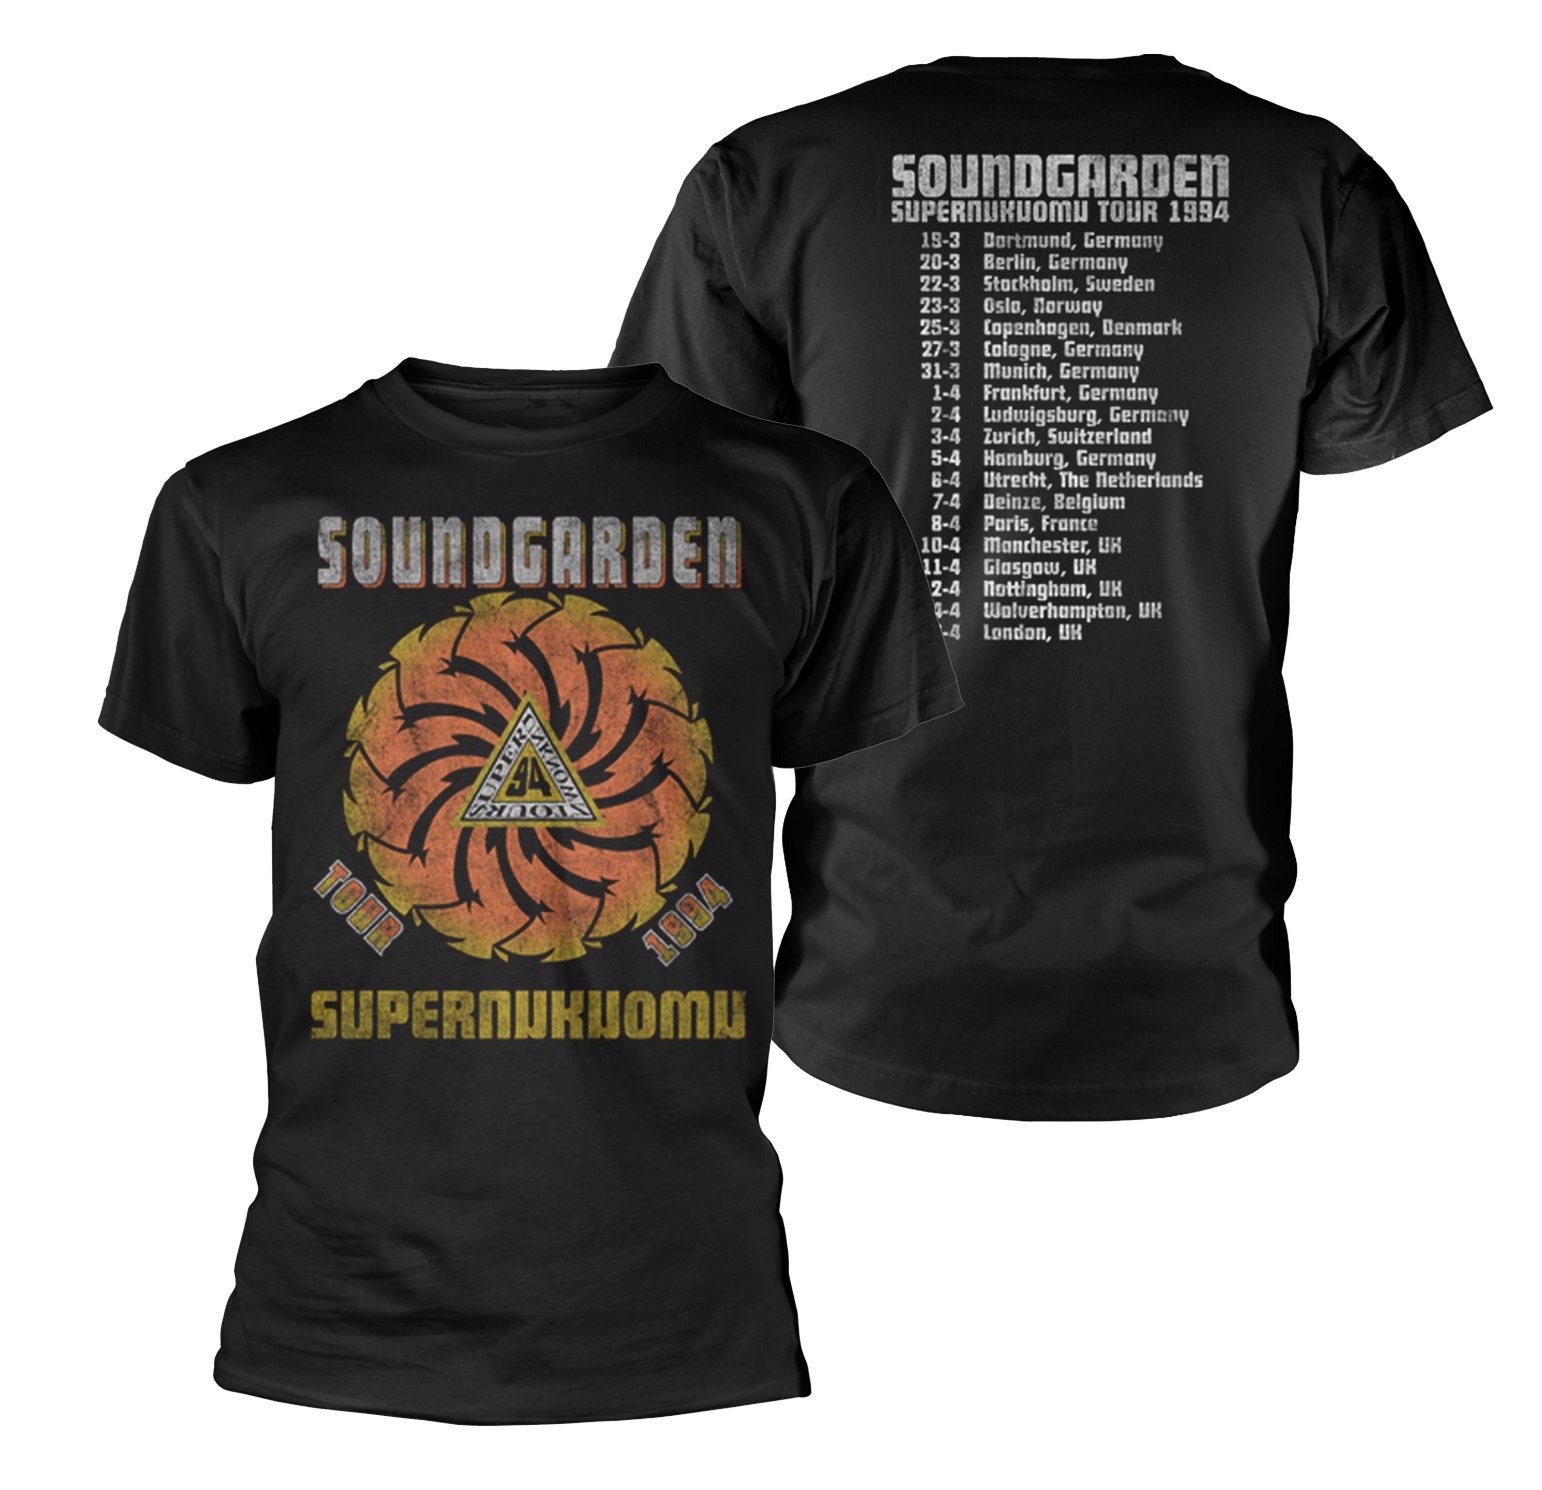 Discover Soundgarden Superunknown Tour 94 Chris CornellT-Shirt